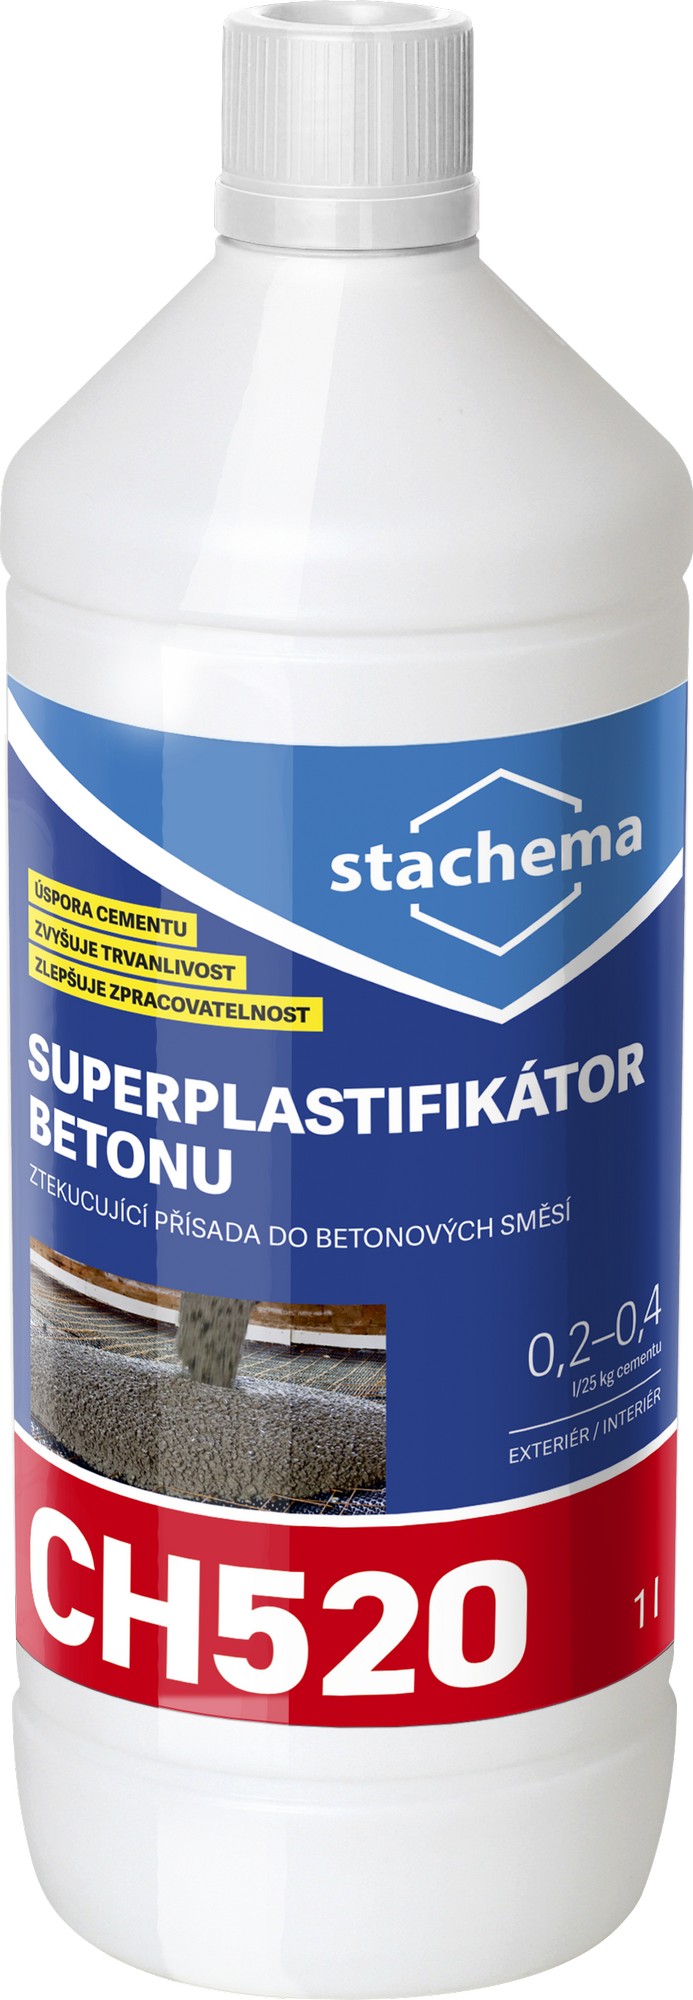 Superplastifikátor betonu Stachema CH520 1 l